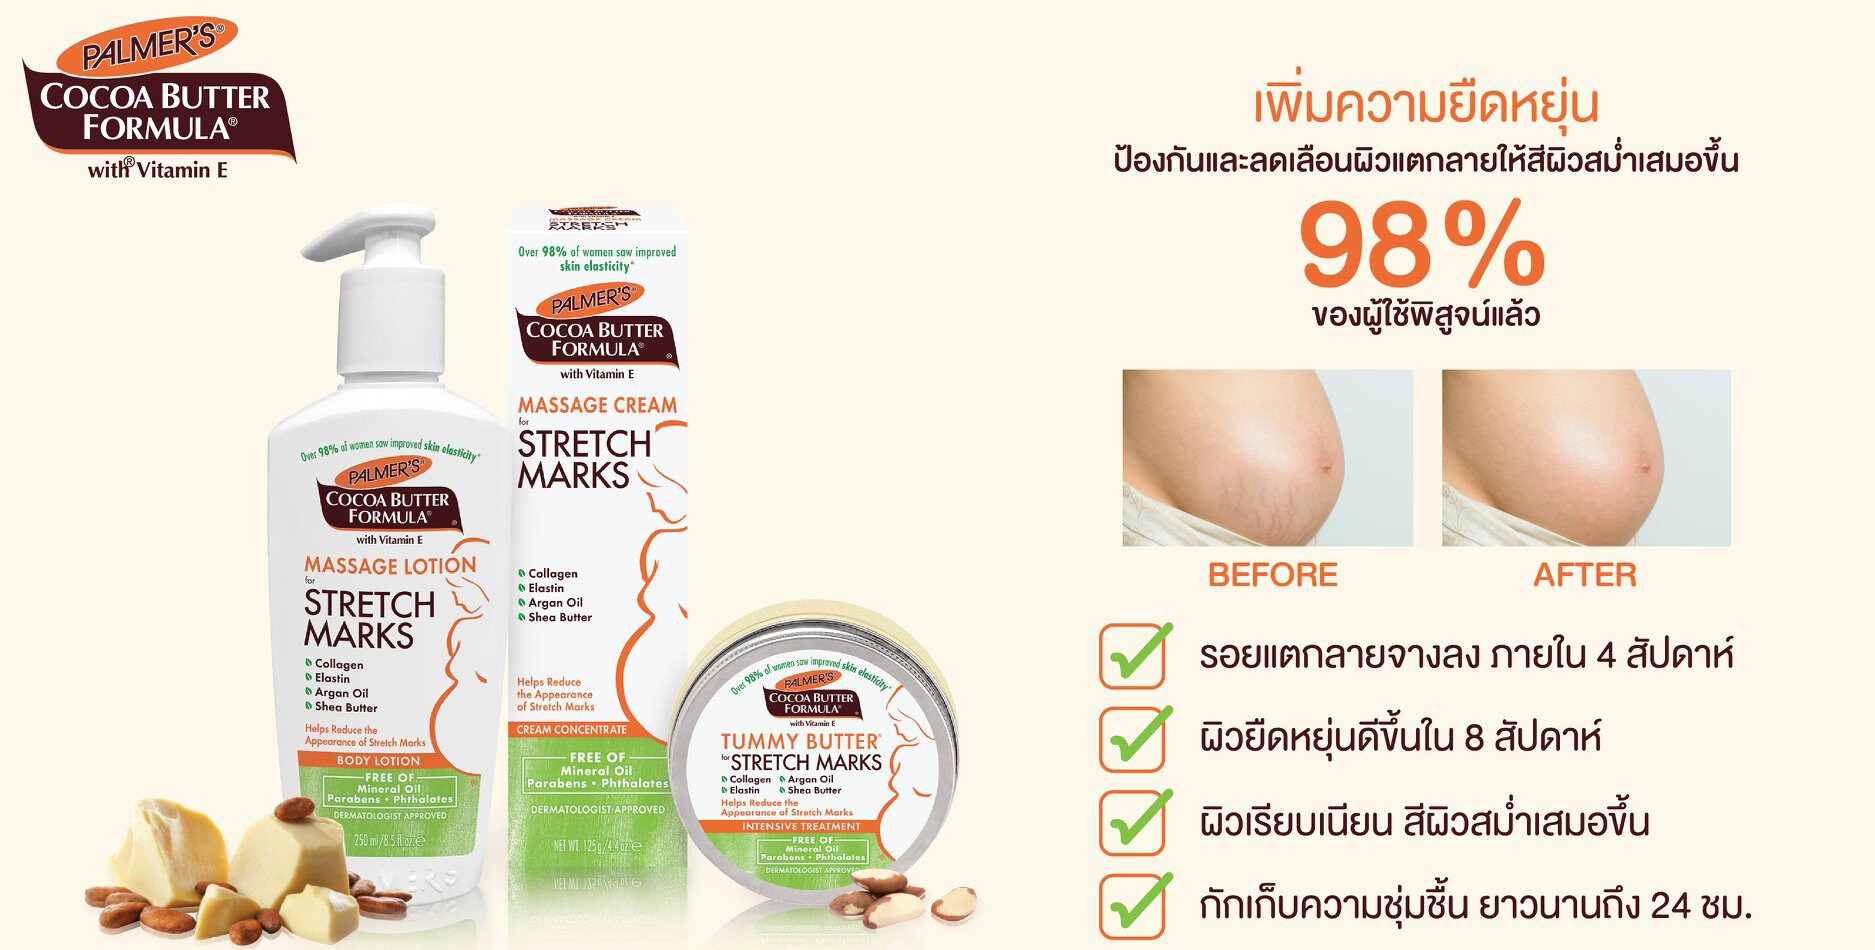 Palmer 's Cocoa Butter Lotion for Strech Marks 250 ml ปาล์เมอรโลชั่นสำหรับครรภ์เดือนที่1-9 ปลอดภัยต่อลูกน้อยในครรภ์ โลชั่นทาท้องลาย ท้องลาย  ครีมทาท้องแตกลาย